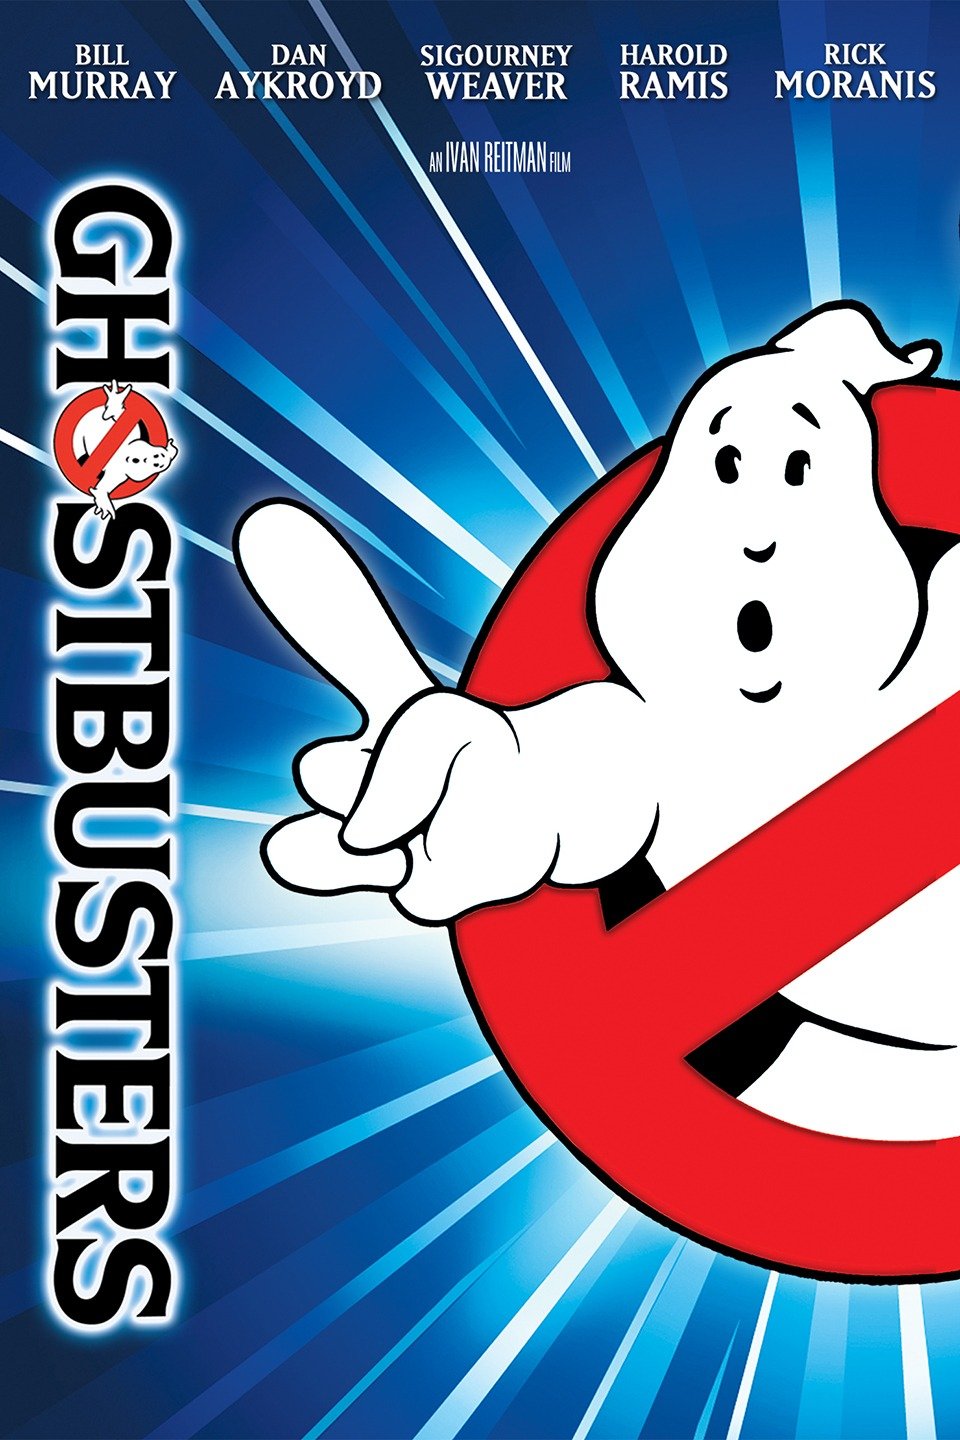 [MINI Super-HQ] Ghostbusters (1984) บริษัทกำจัดผี ภาค 1 [1080p] [พากย์ไทย 5.1 + เสียงอังกฤษ DTS] [บรรยายไทย + อังกฤษ] [เสียงไทย + ซับไทย] [OPENLOAD]